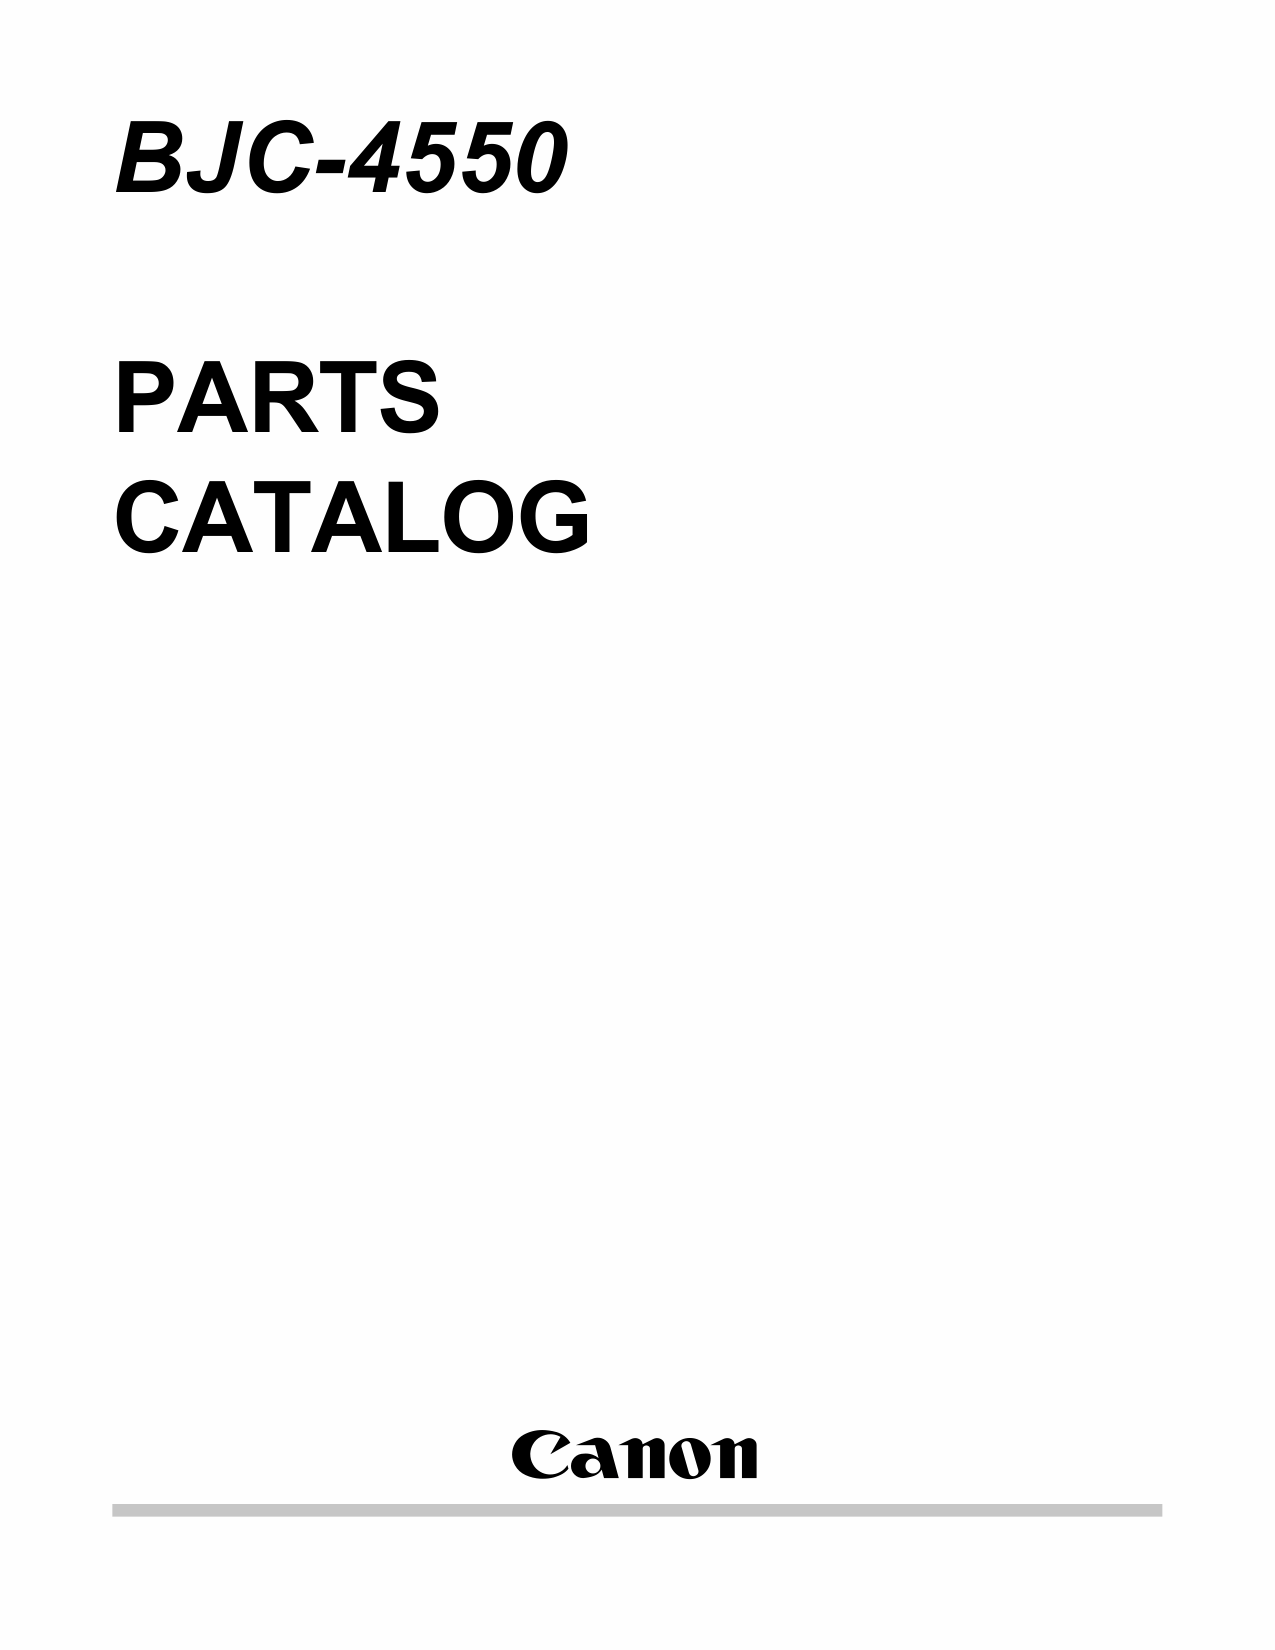 Canon BubbleJet BJC-4550 Parts Catalog Manual-1